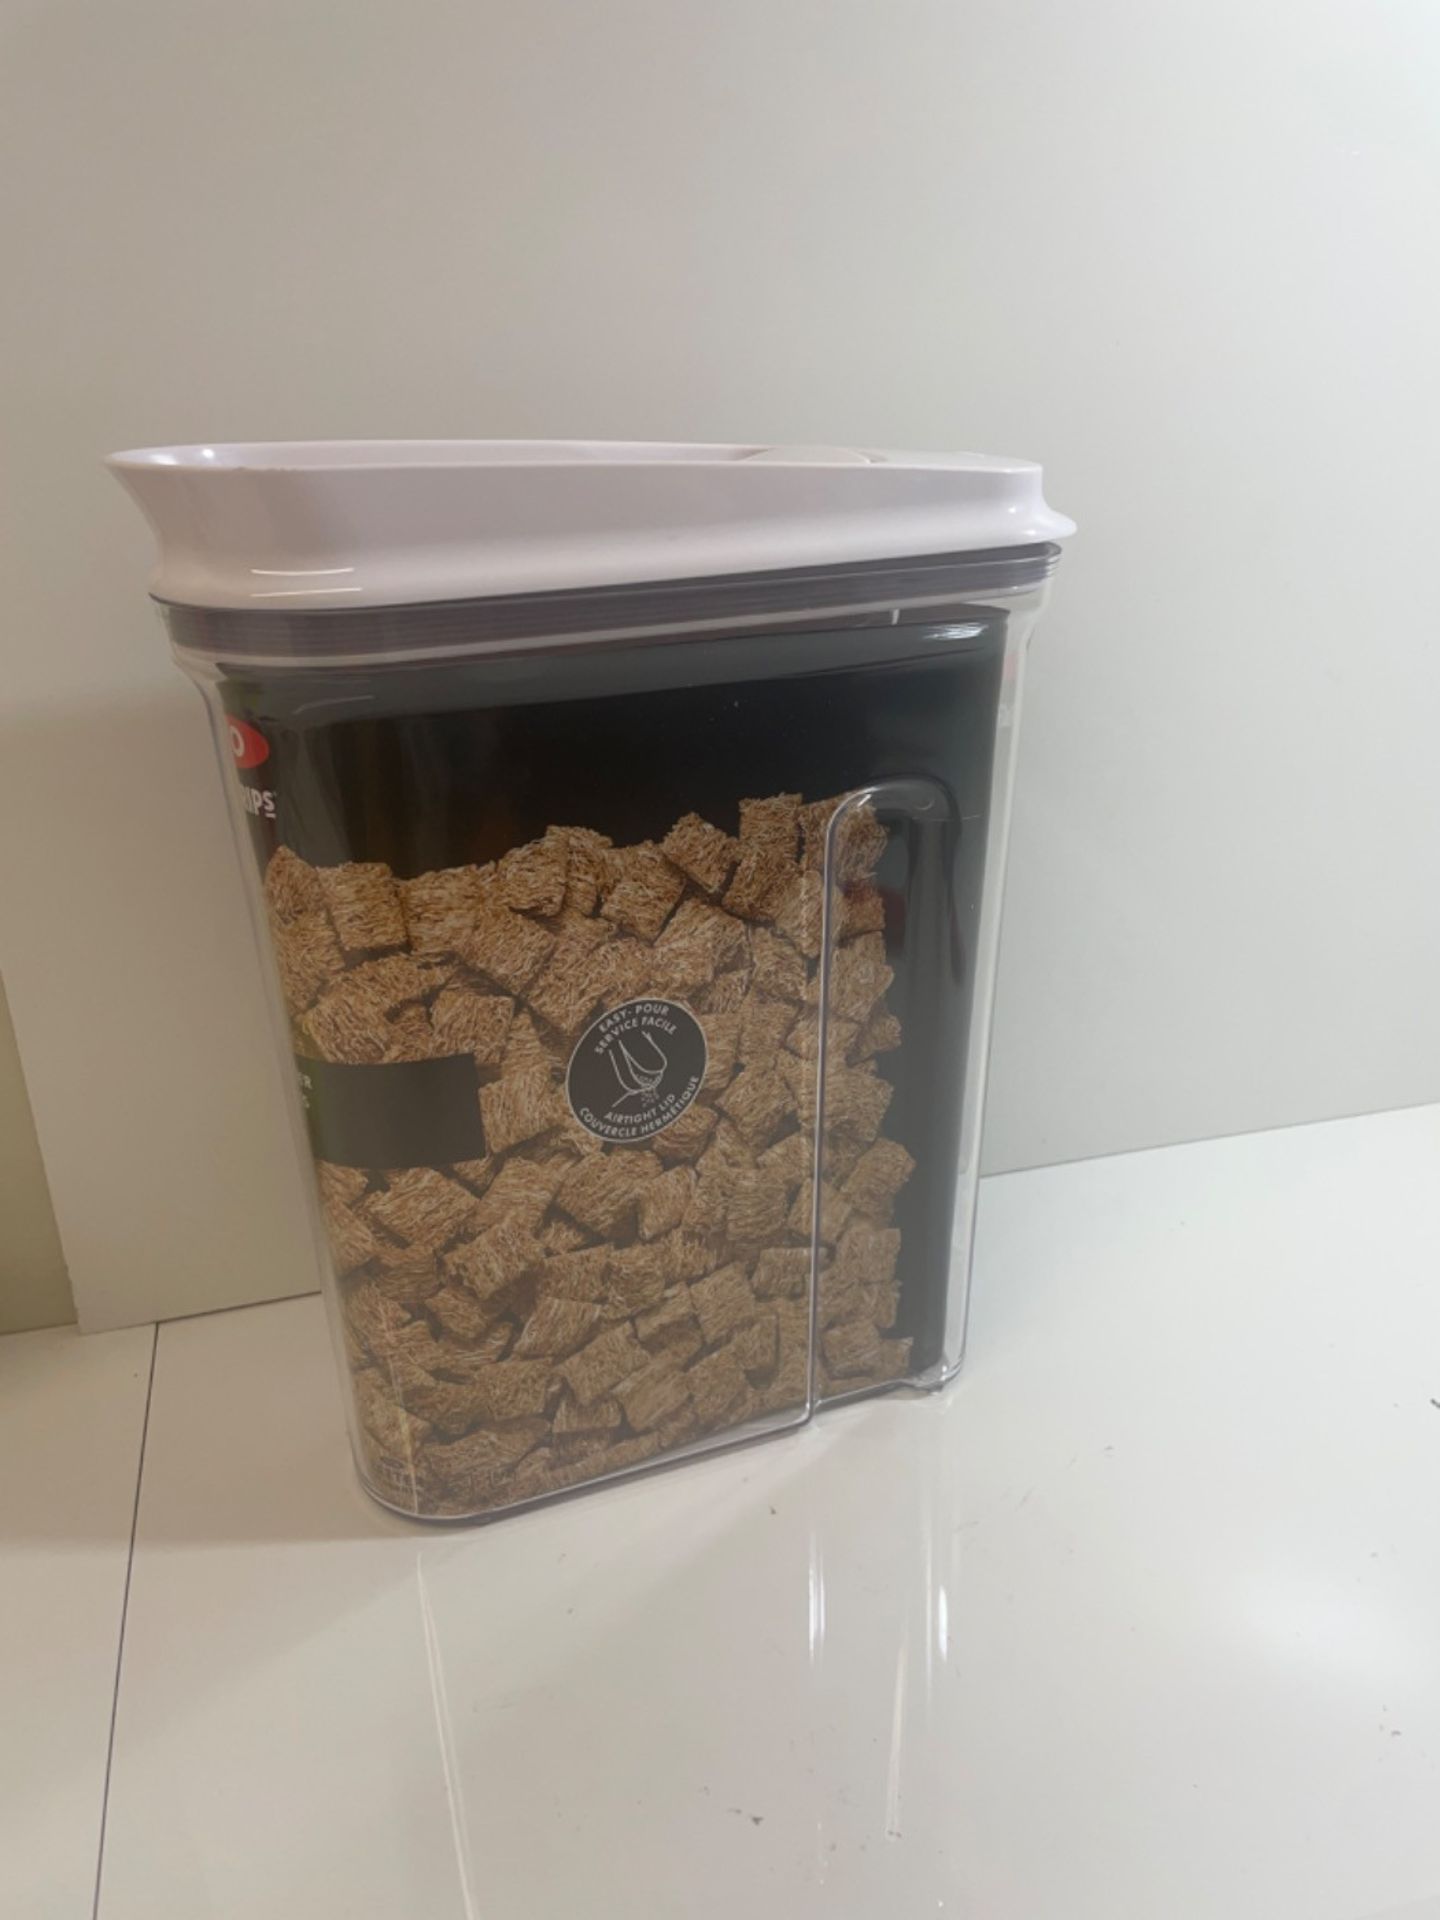 OXO Good Grips Pop Large Cereal Dispenser, Grey, Clear - 4.2 Litre - Image 3 of 3